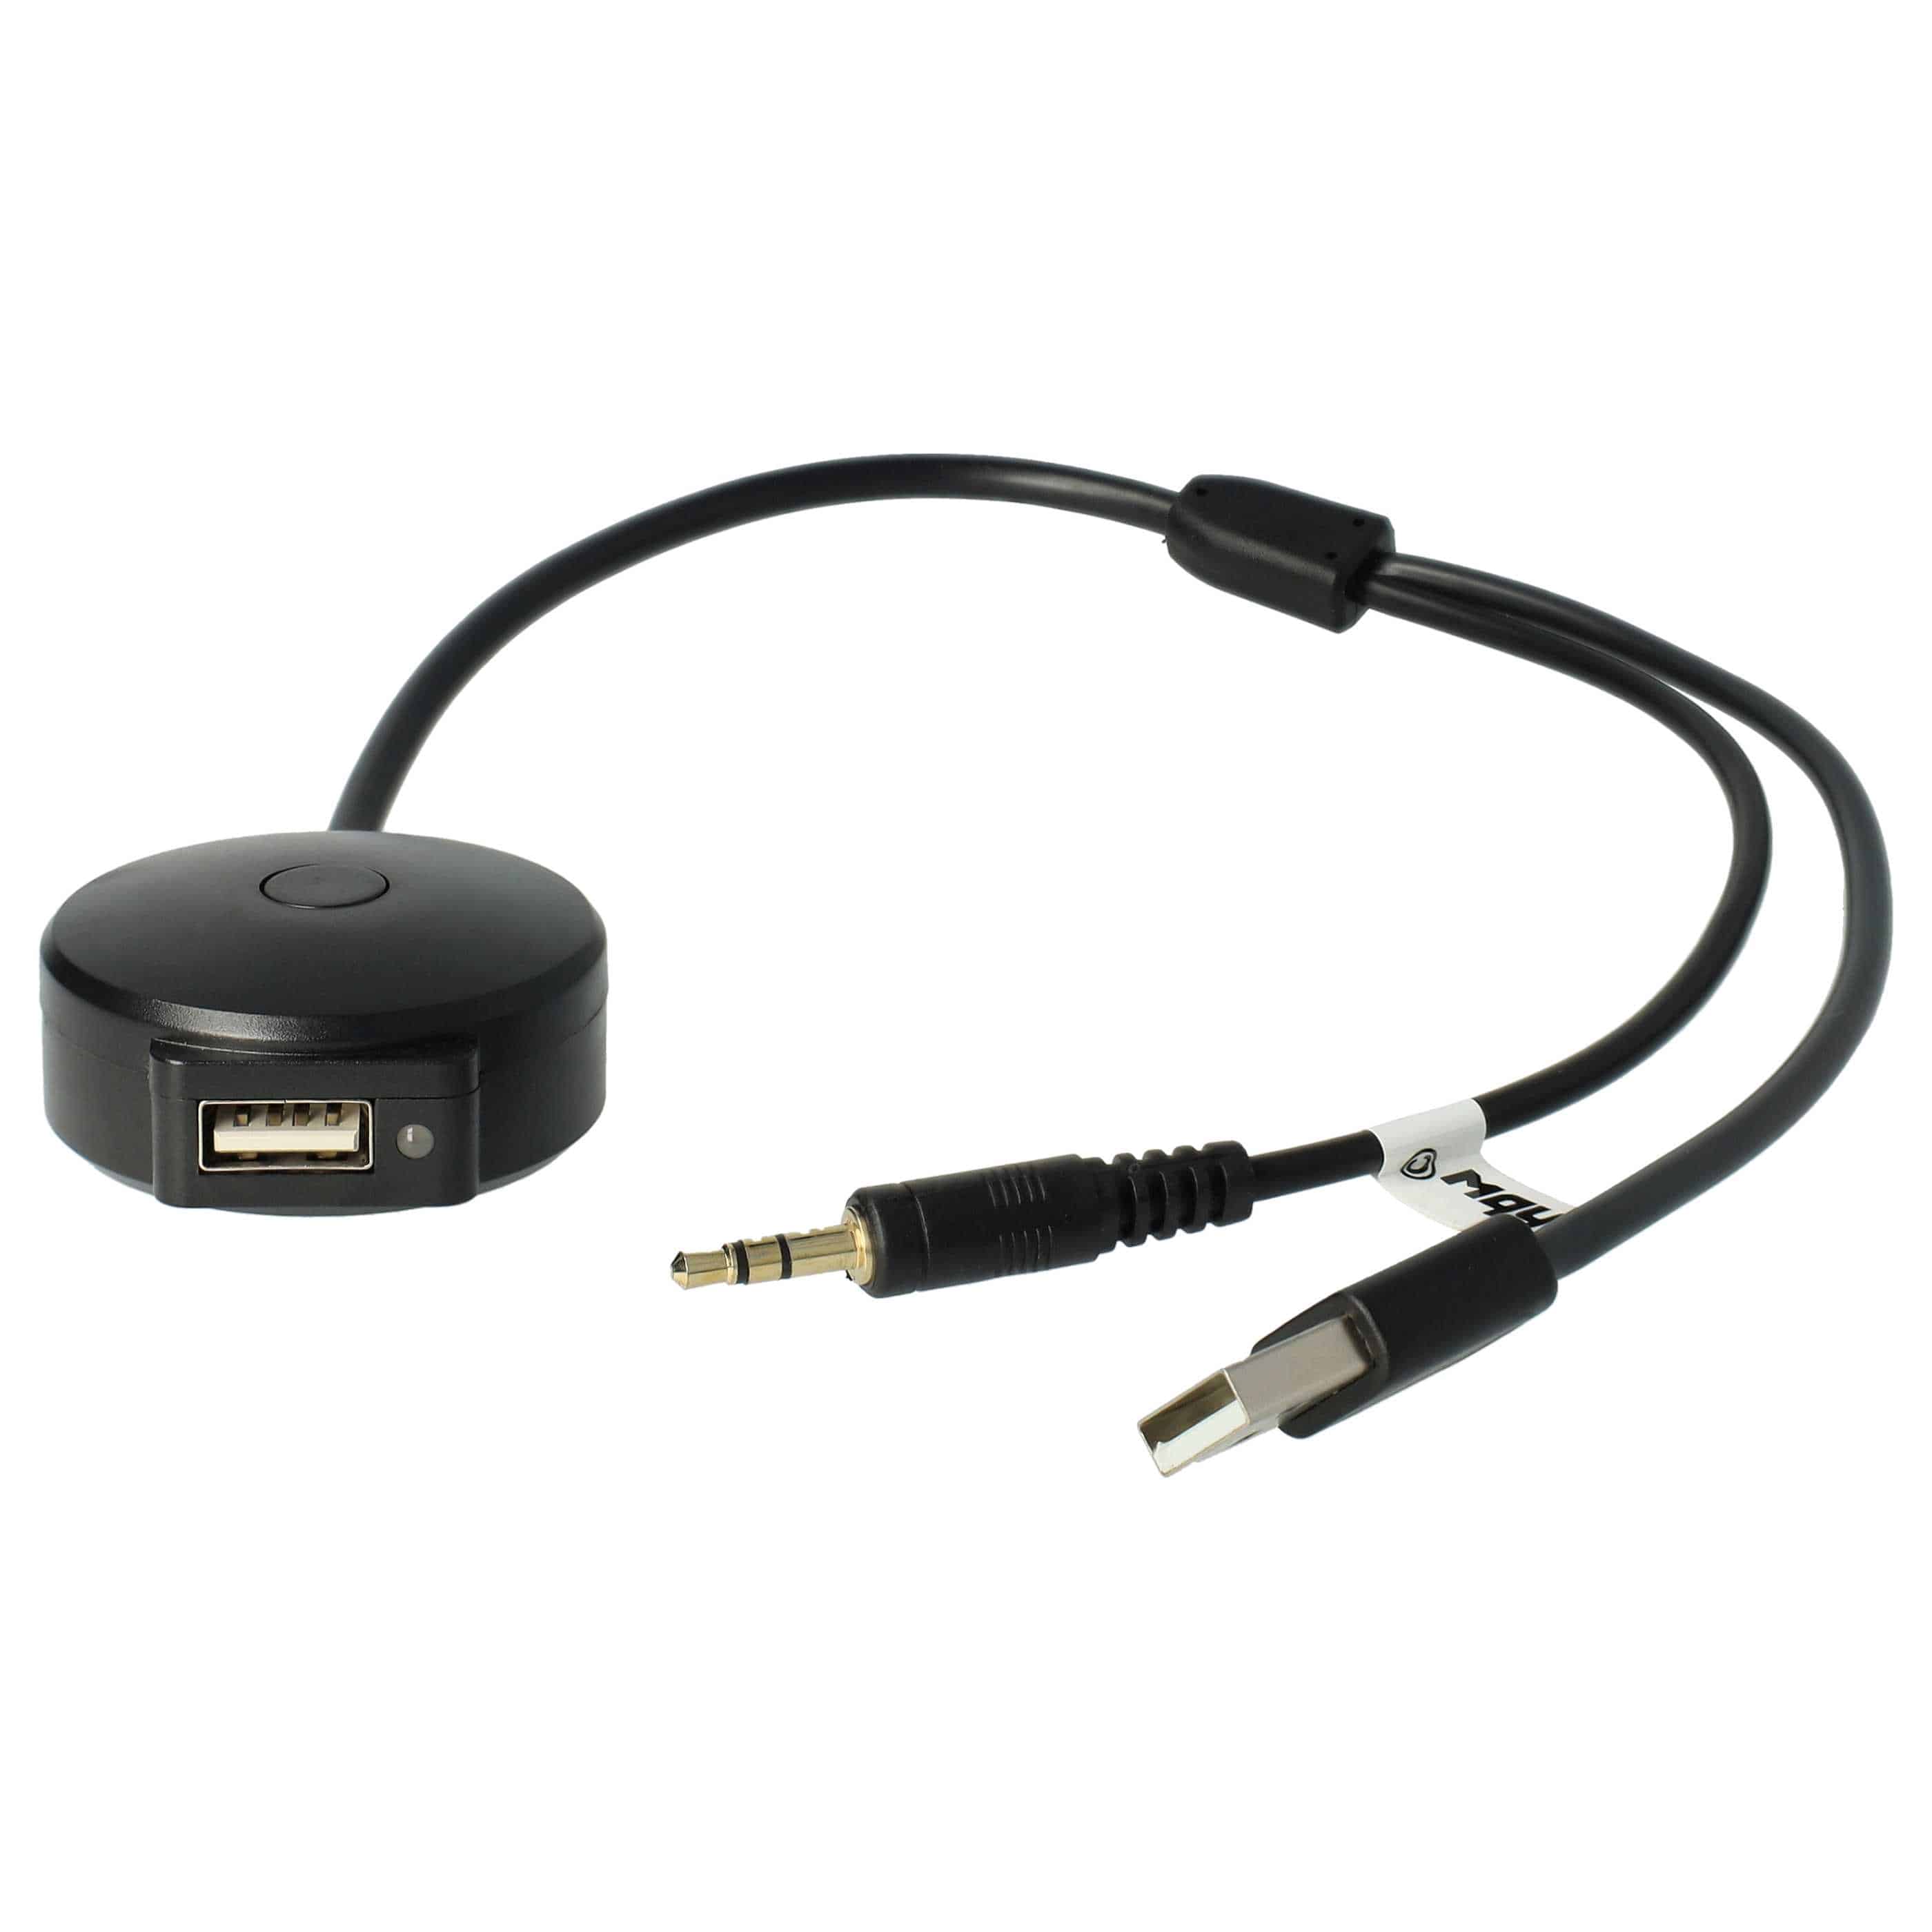 AUX Audio Adapter Cable for BMW, MINI Z4 Car Radio etc. - USB, Bluetooth